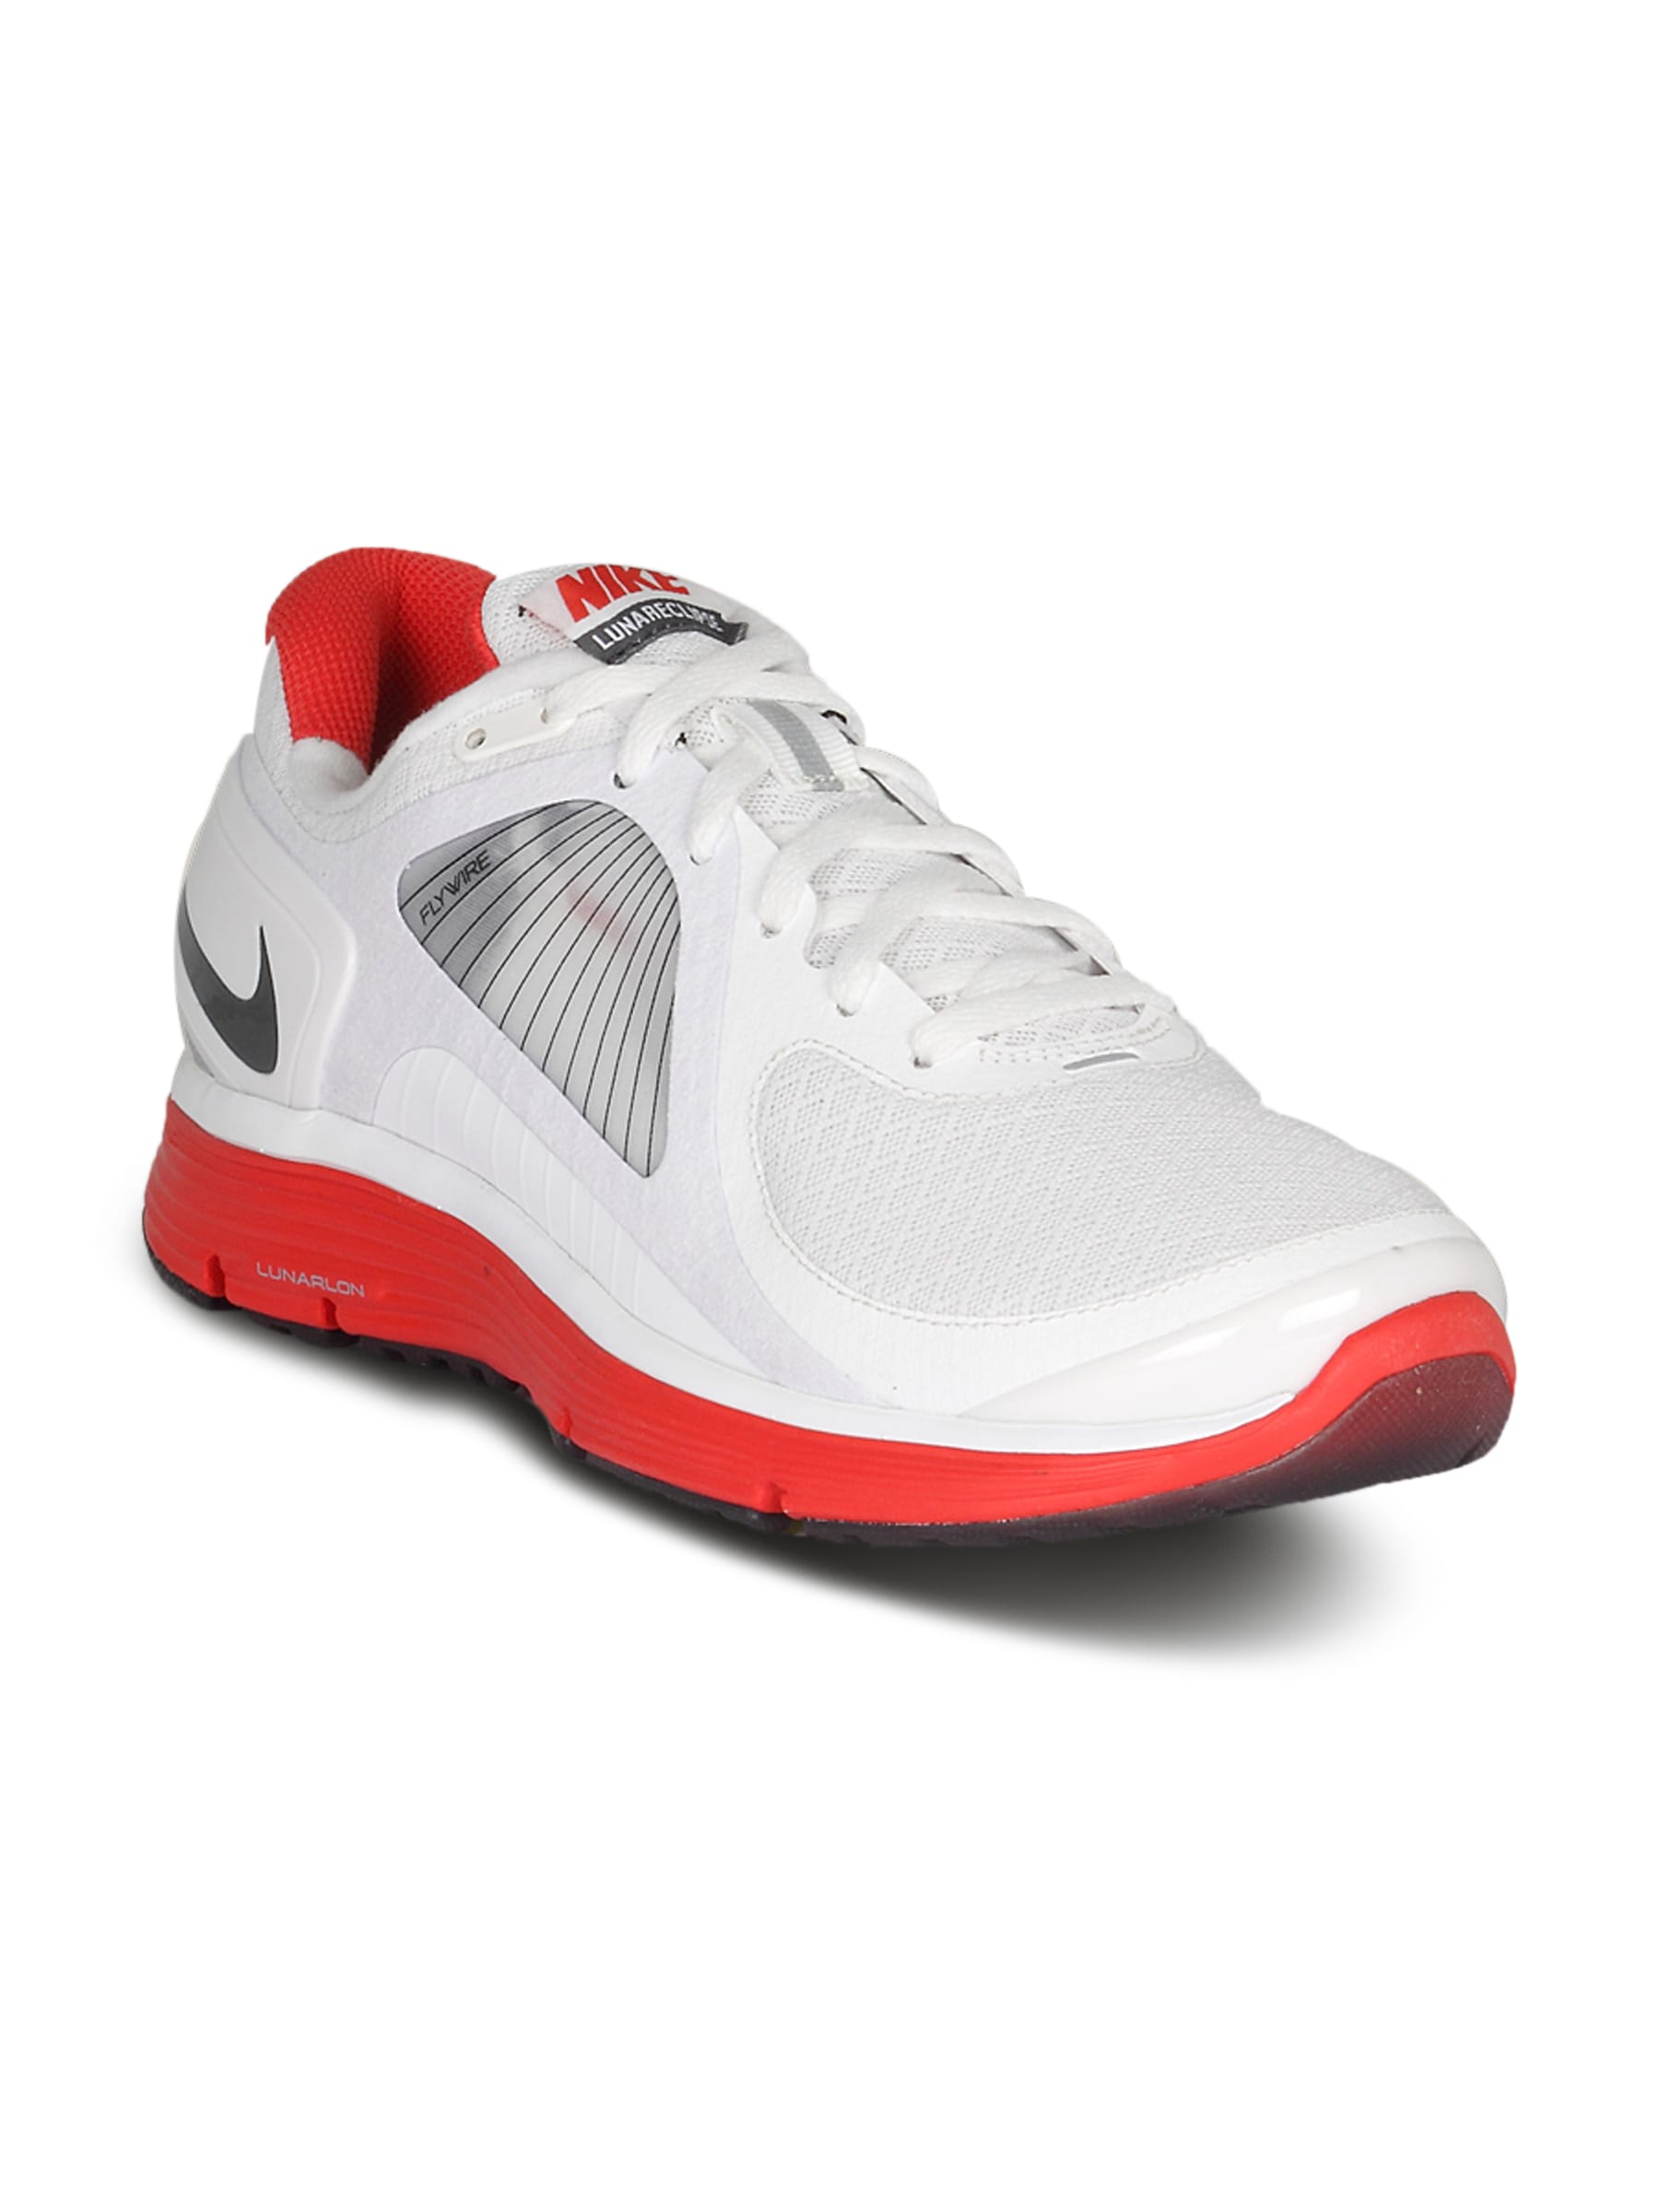 Nike Men's Lunareclipse White Shoe